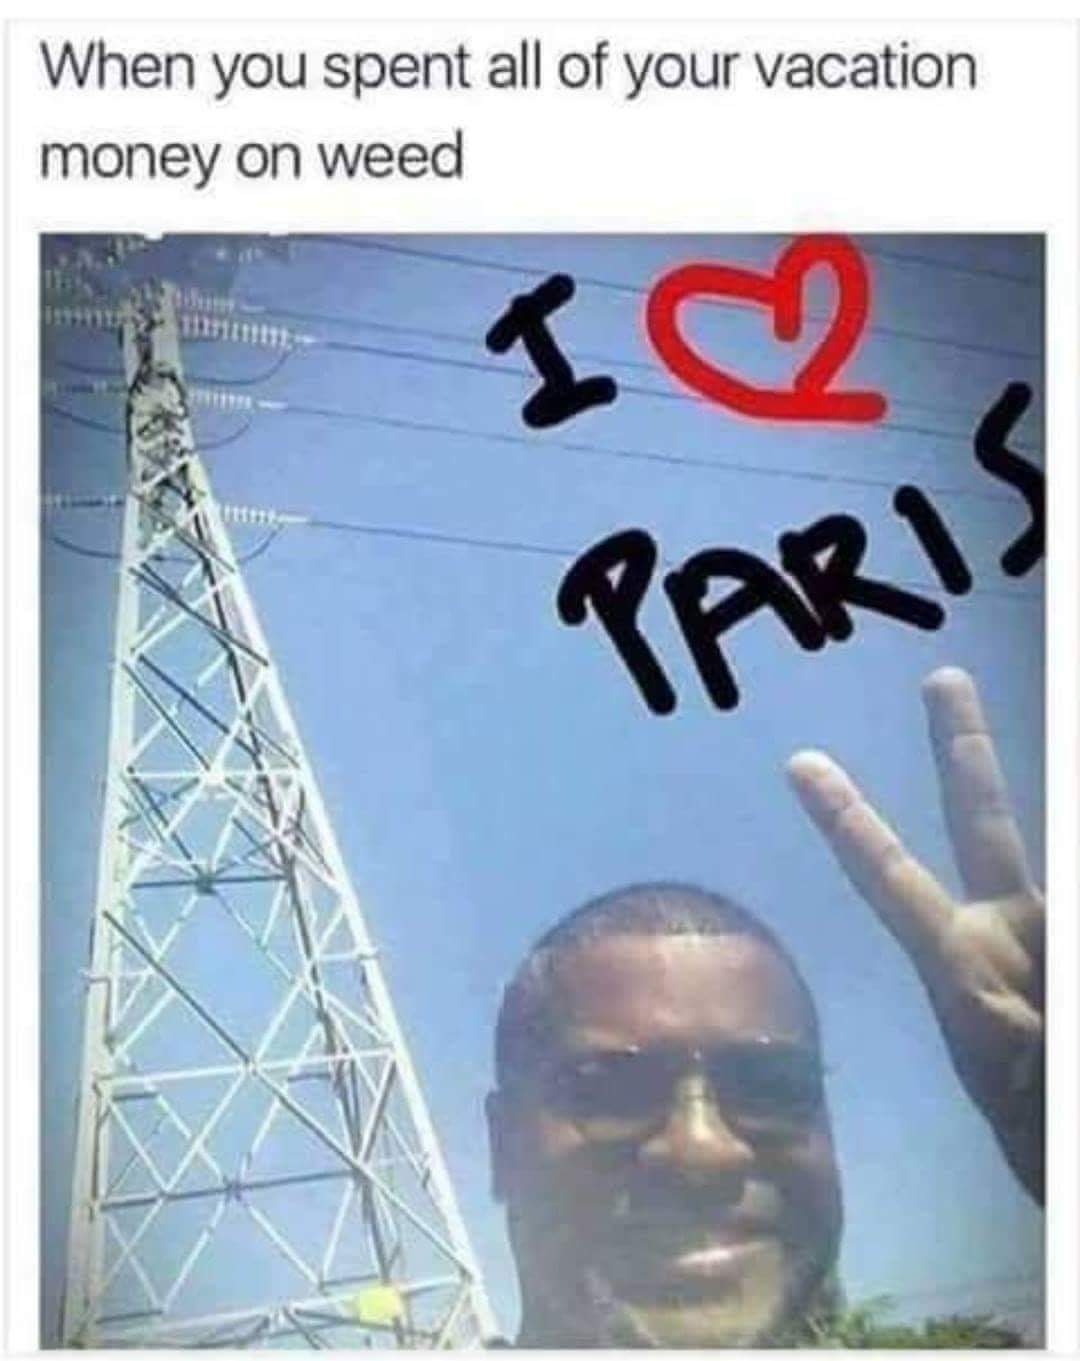 Paris - meme